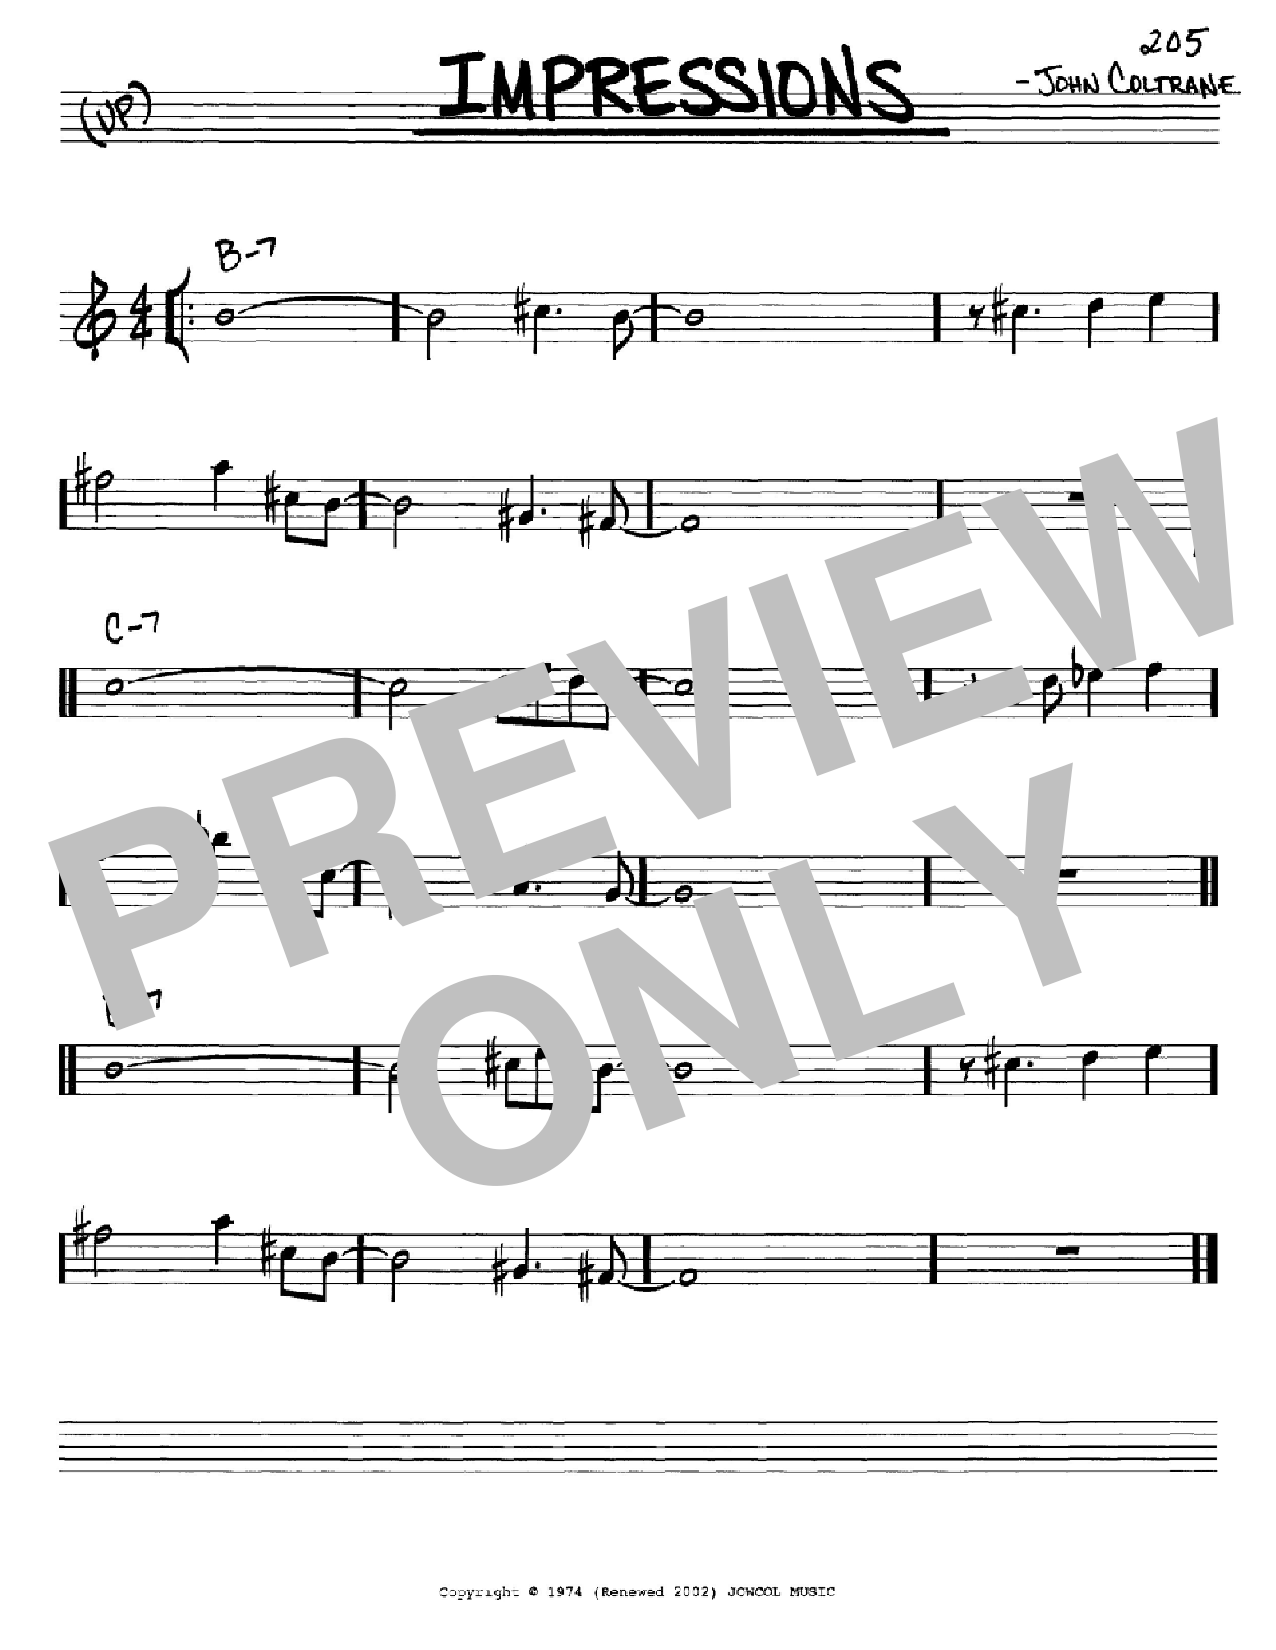 John Coltrane Impressions Sheet Music Notes & Chords for Guitar Tab (Single Guitar) - Download or Print PDF